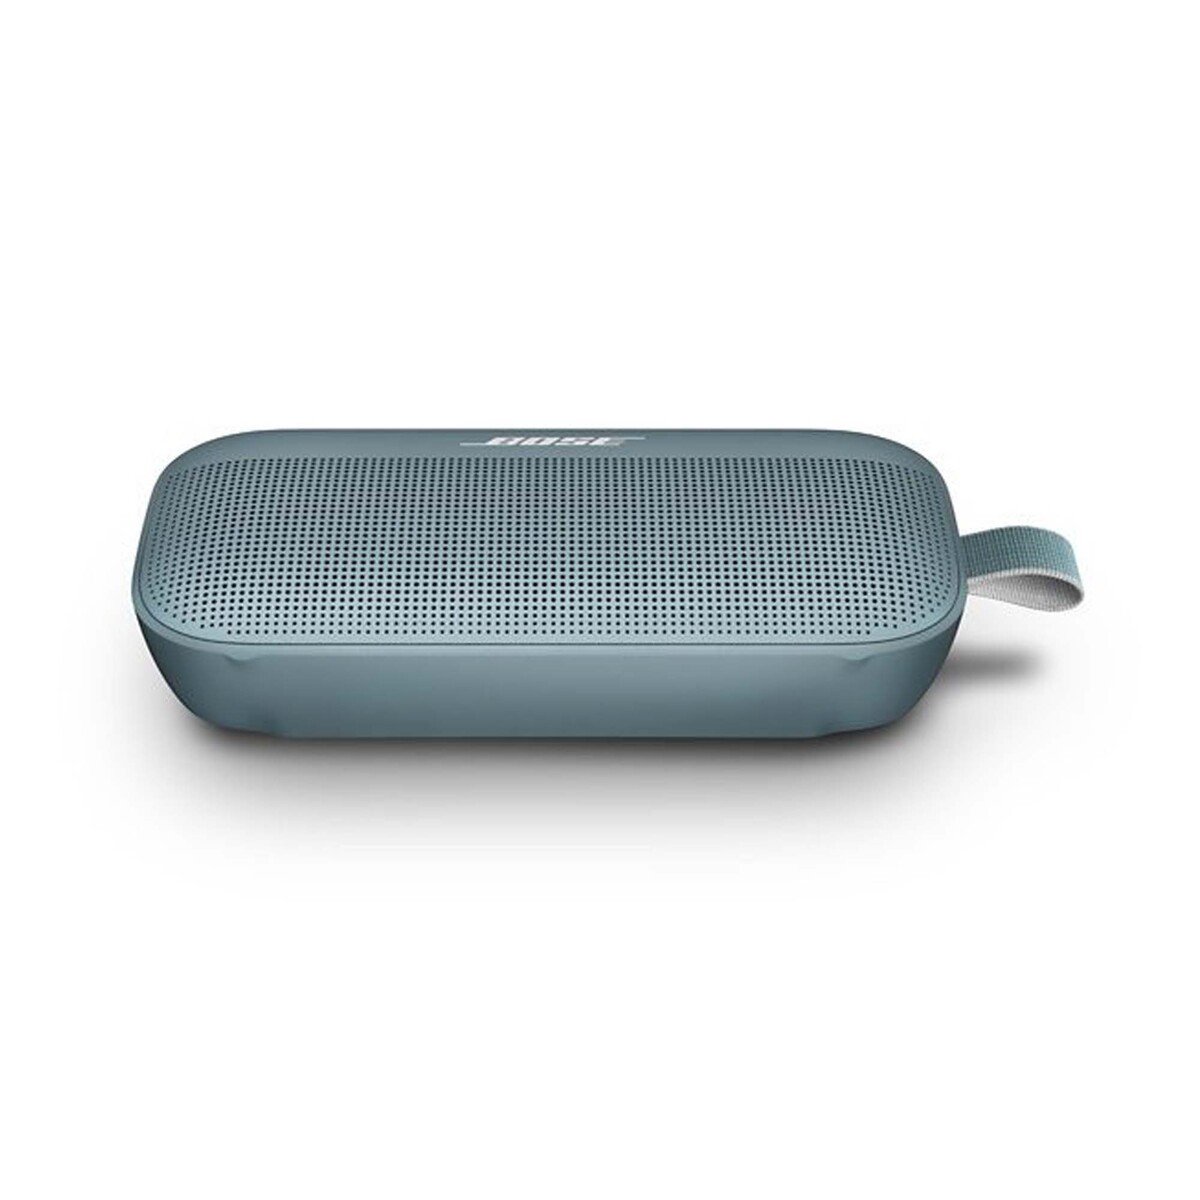 Bose SoundLink Flex Bluetooth speaker Stone Blue